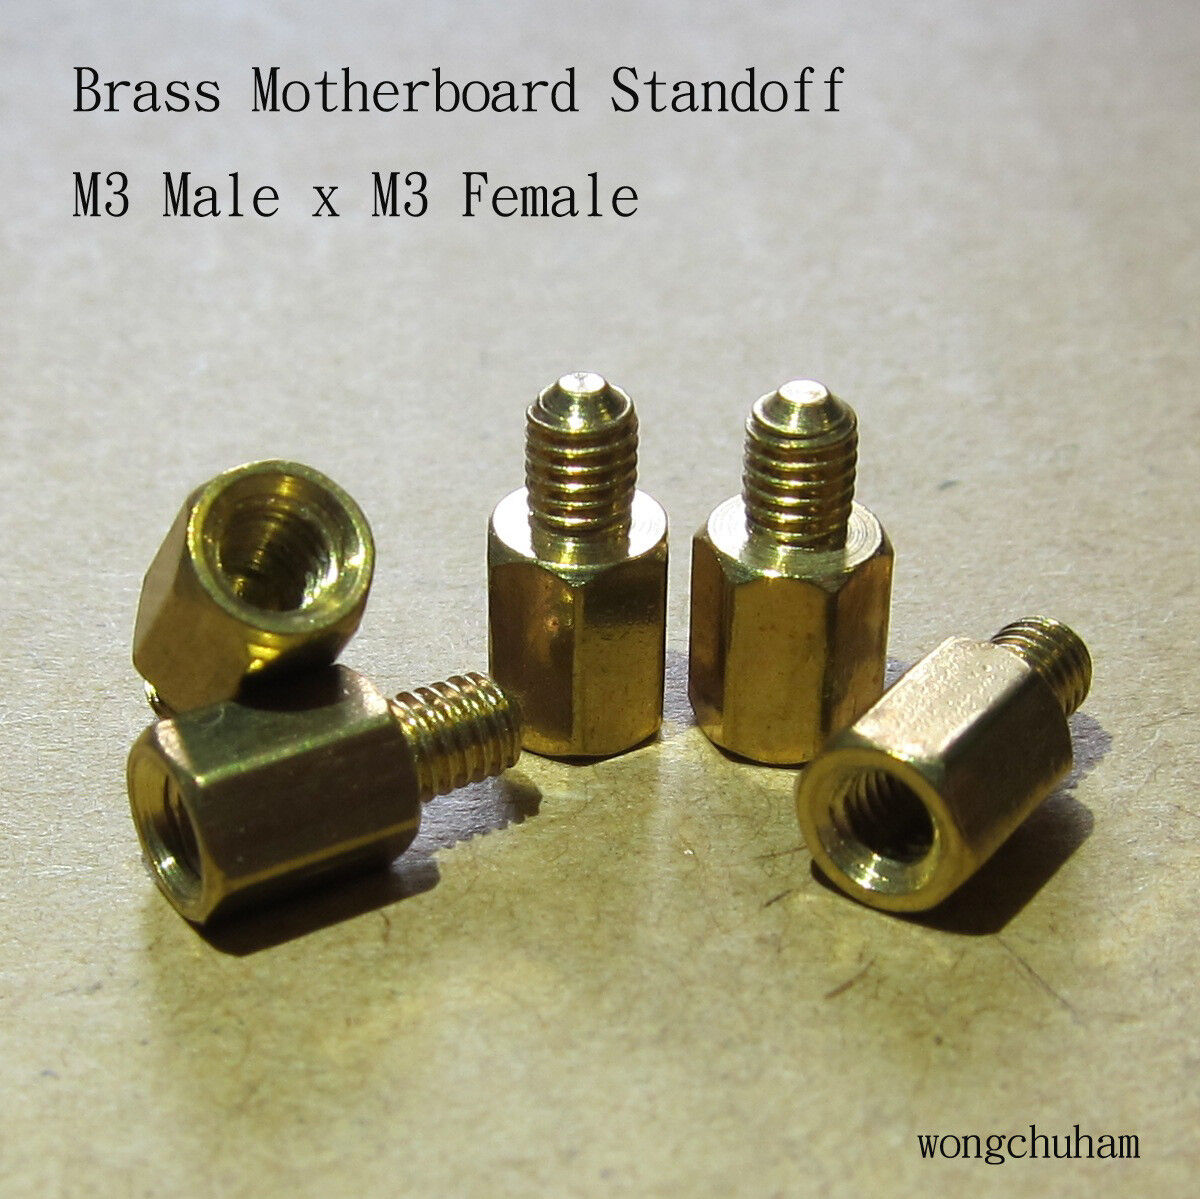 Brass motherboard standoff M3 male x M3 female - 25 pcs